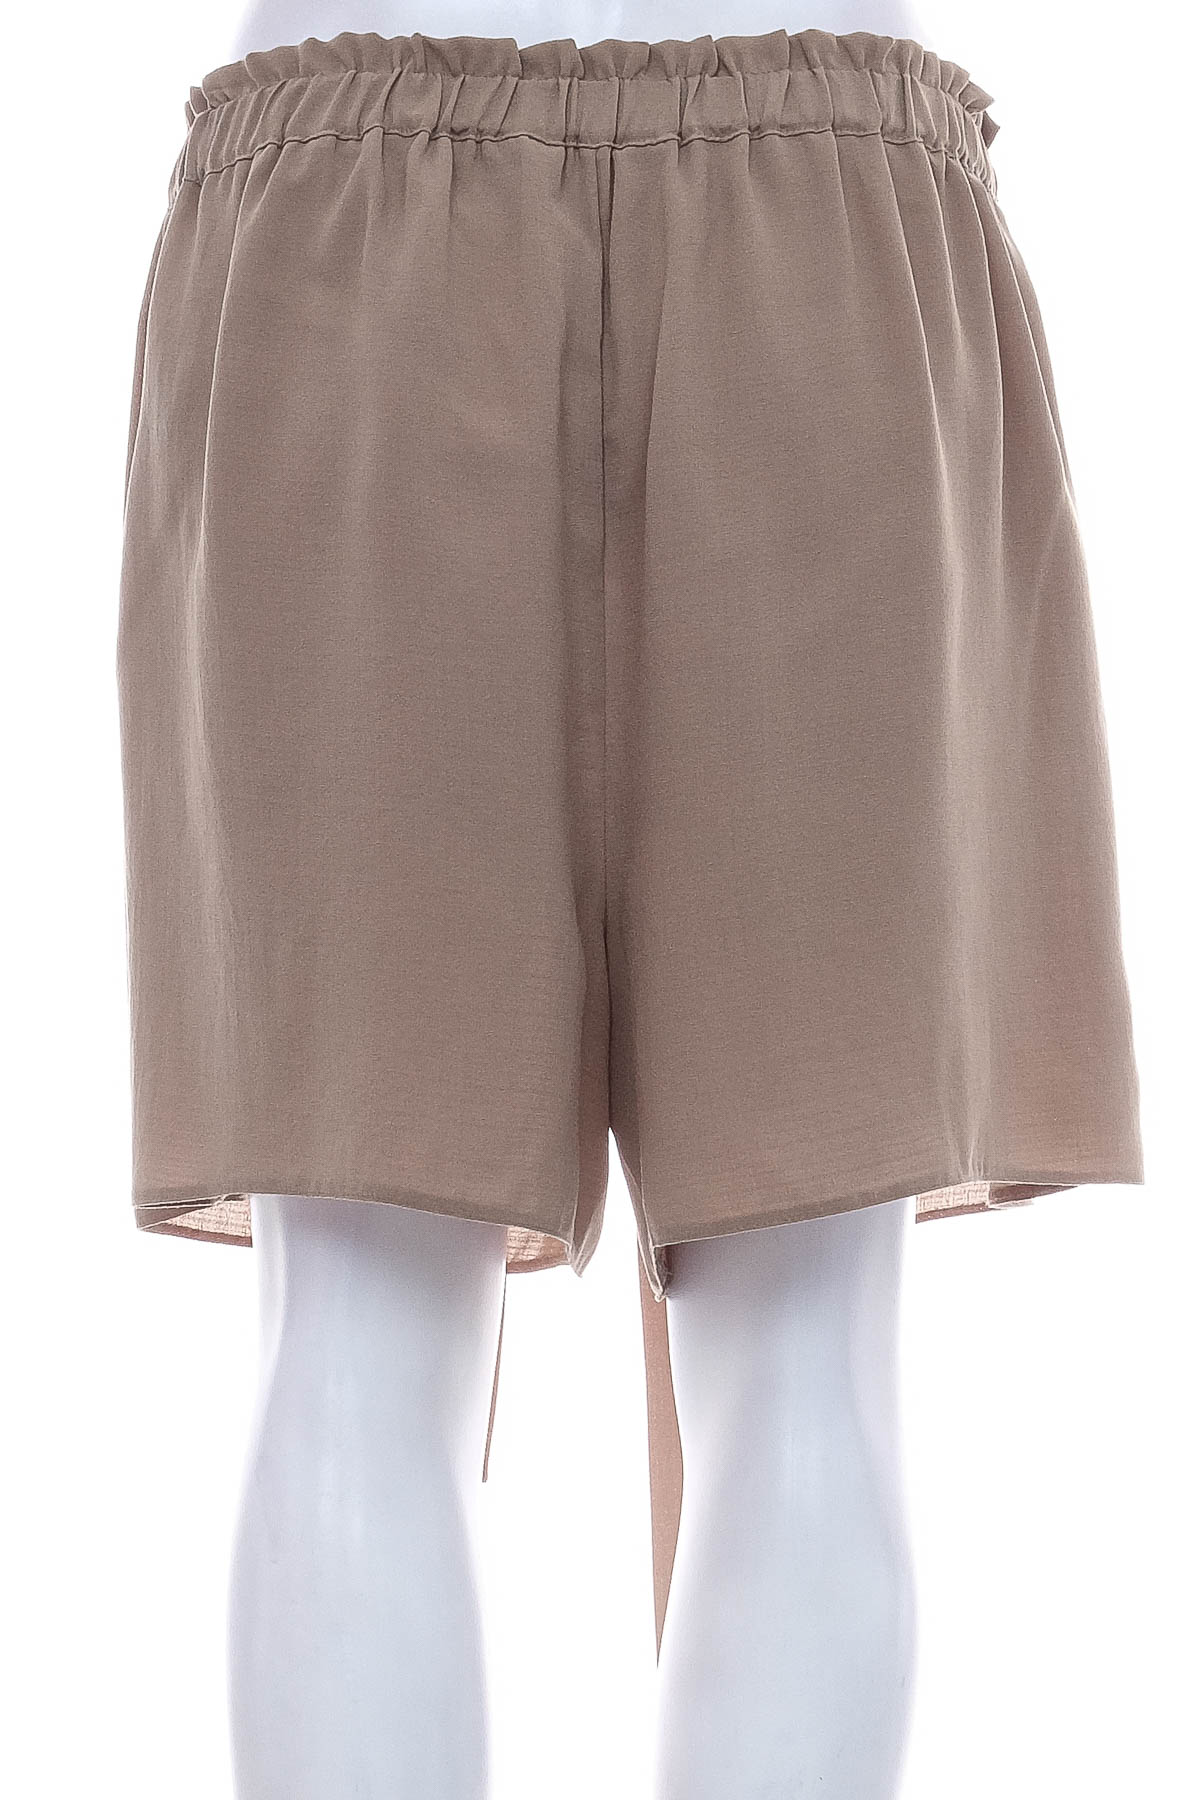 Female shorts - Dorothy Perkins - 1